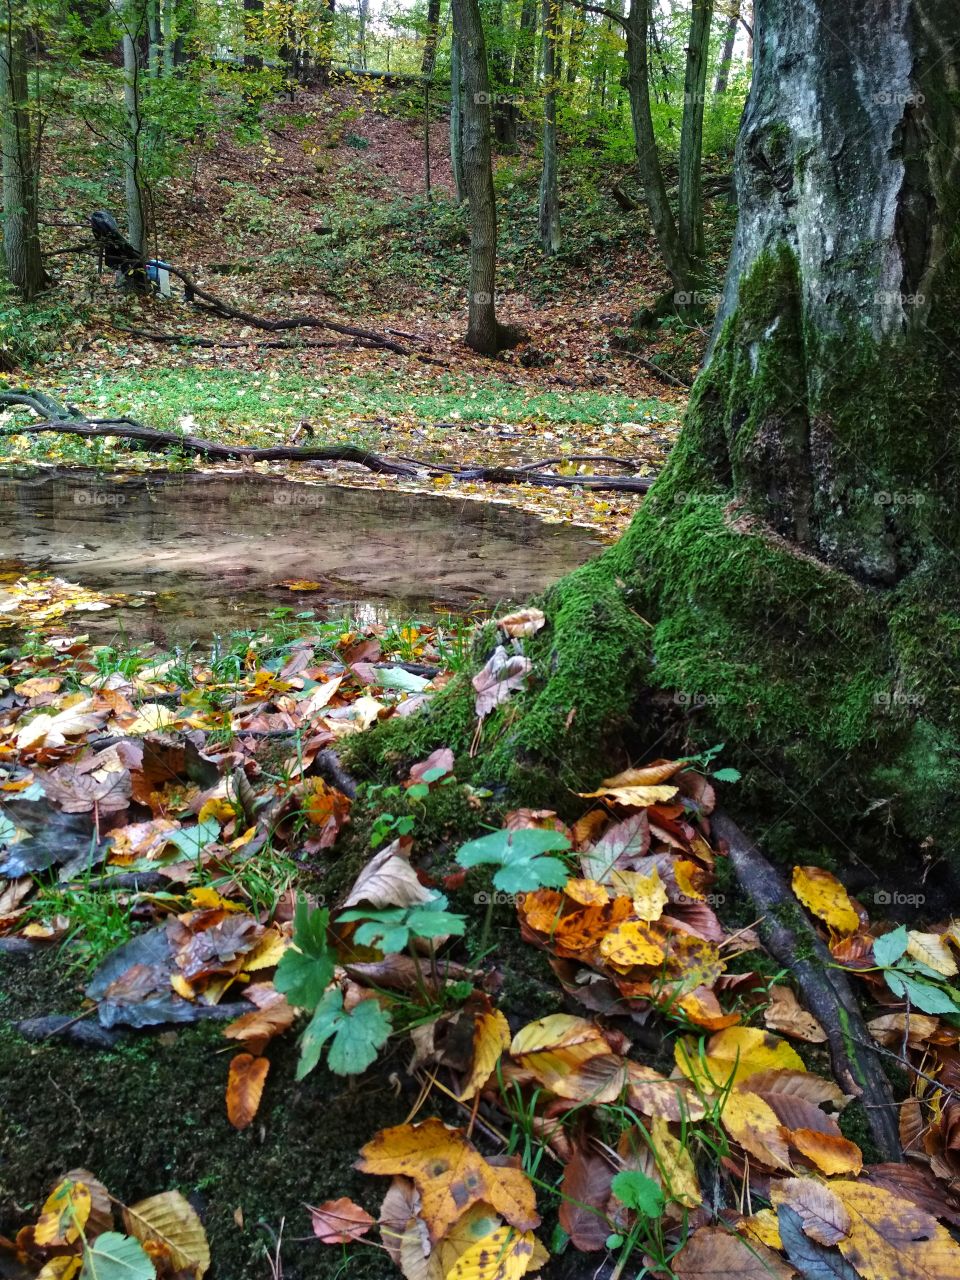 Polish autumn - leaves